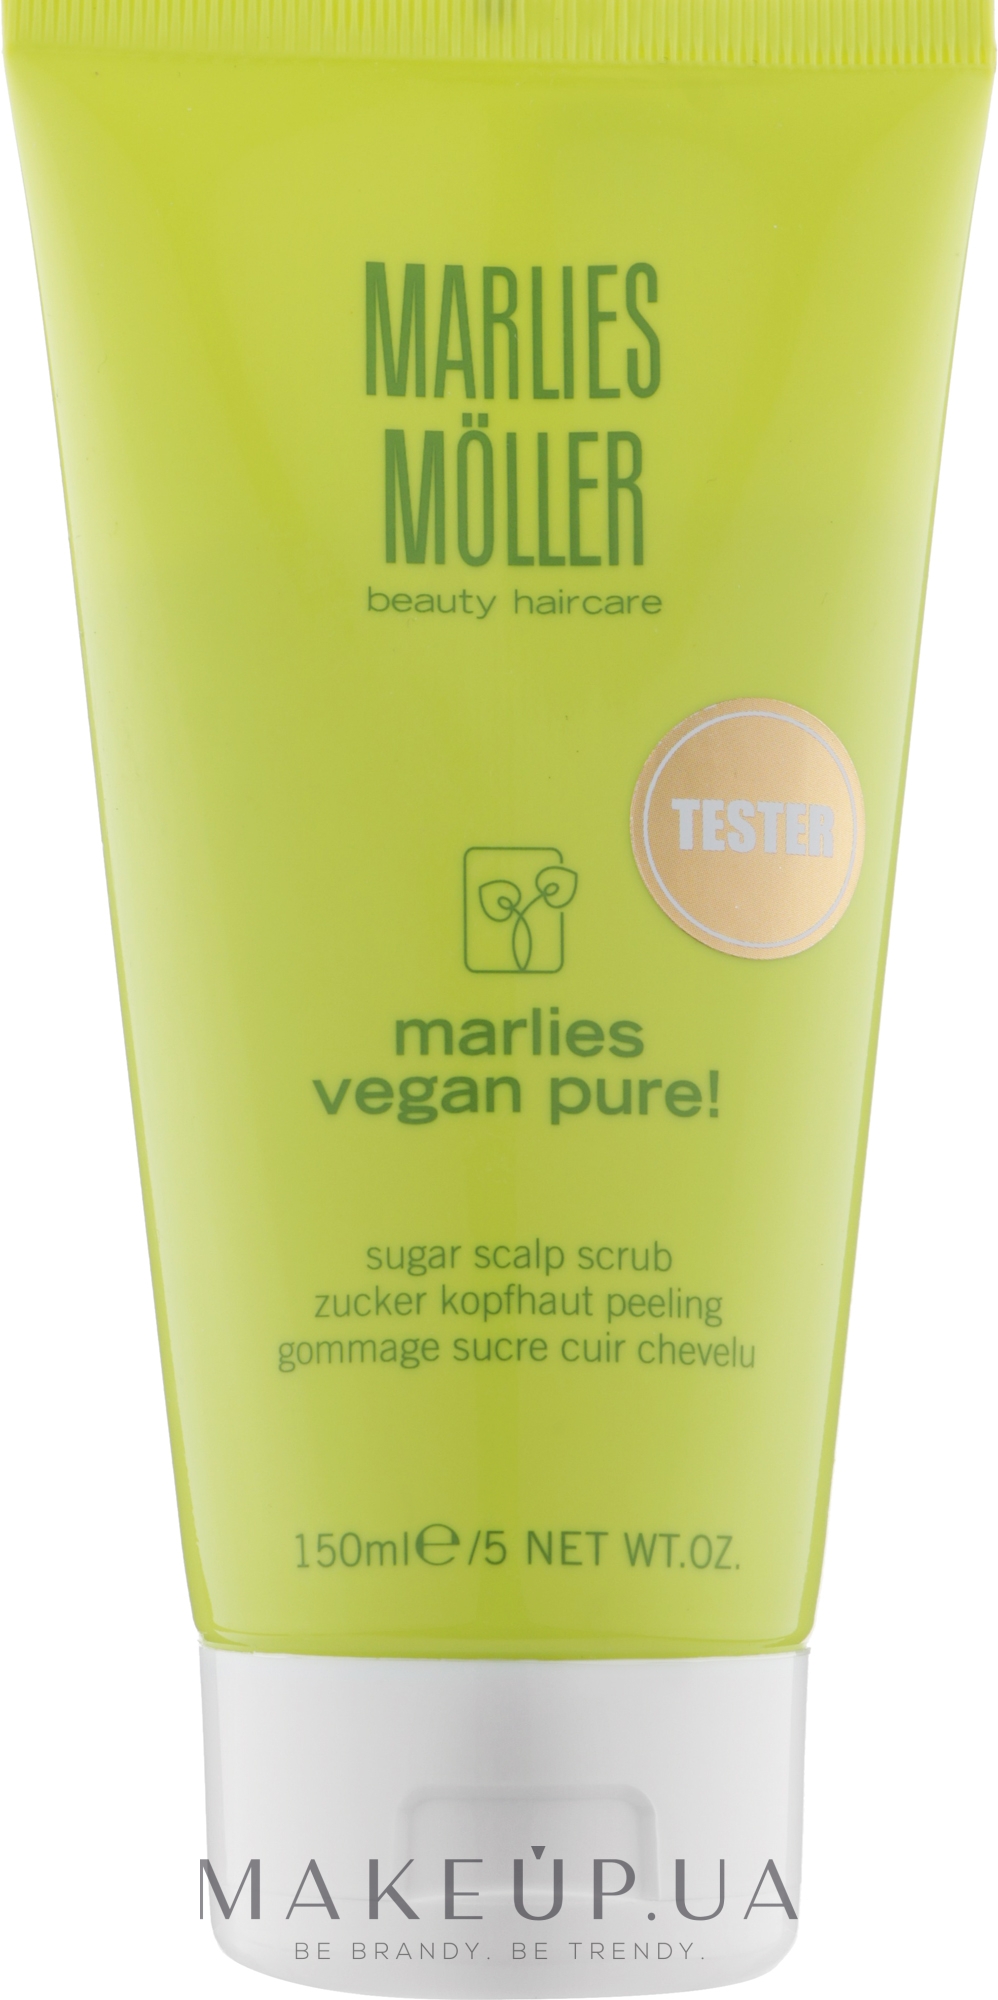 Цукровий скраб для шкіри голови "Веган" - Marlies Moller Marlies Vegan Pure! Sugar Sculp Scrub (тестер) — фото 150ml